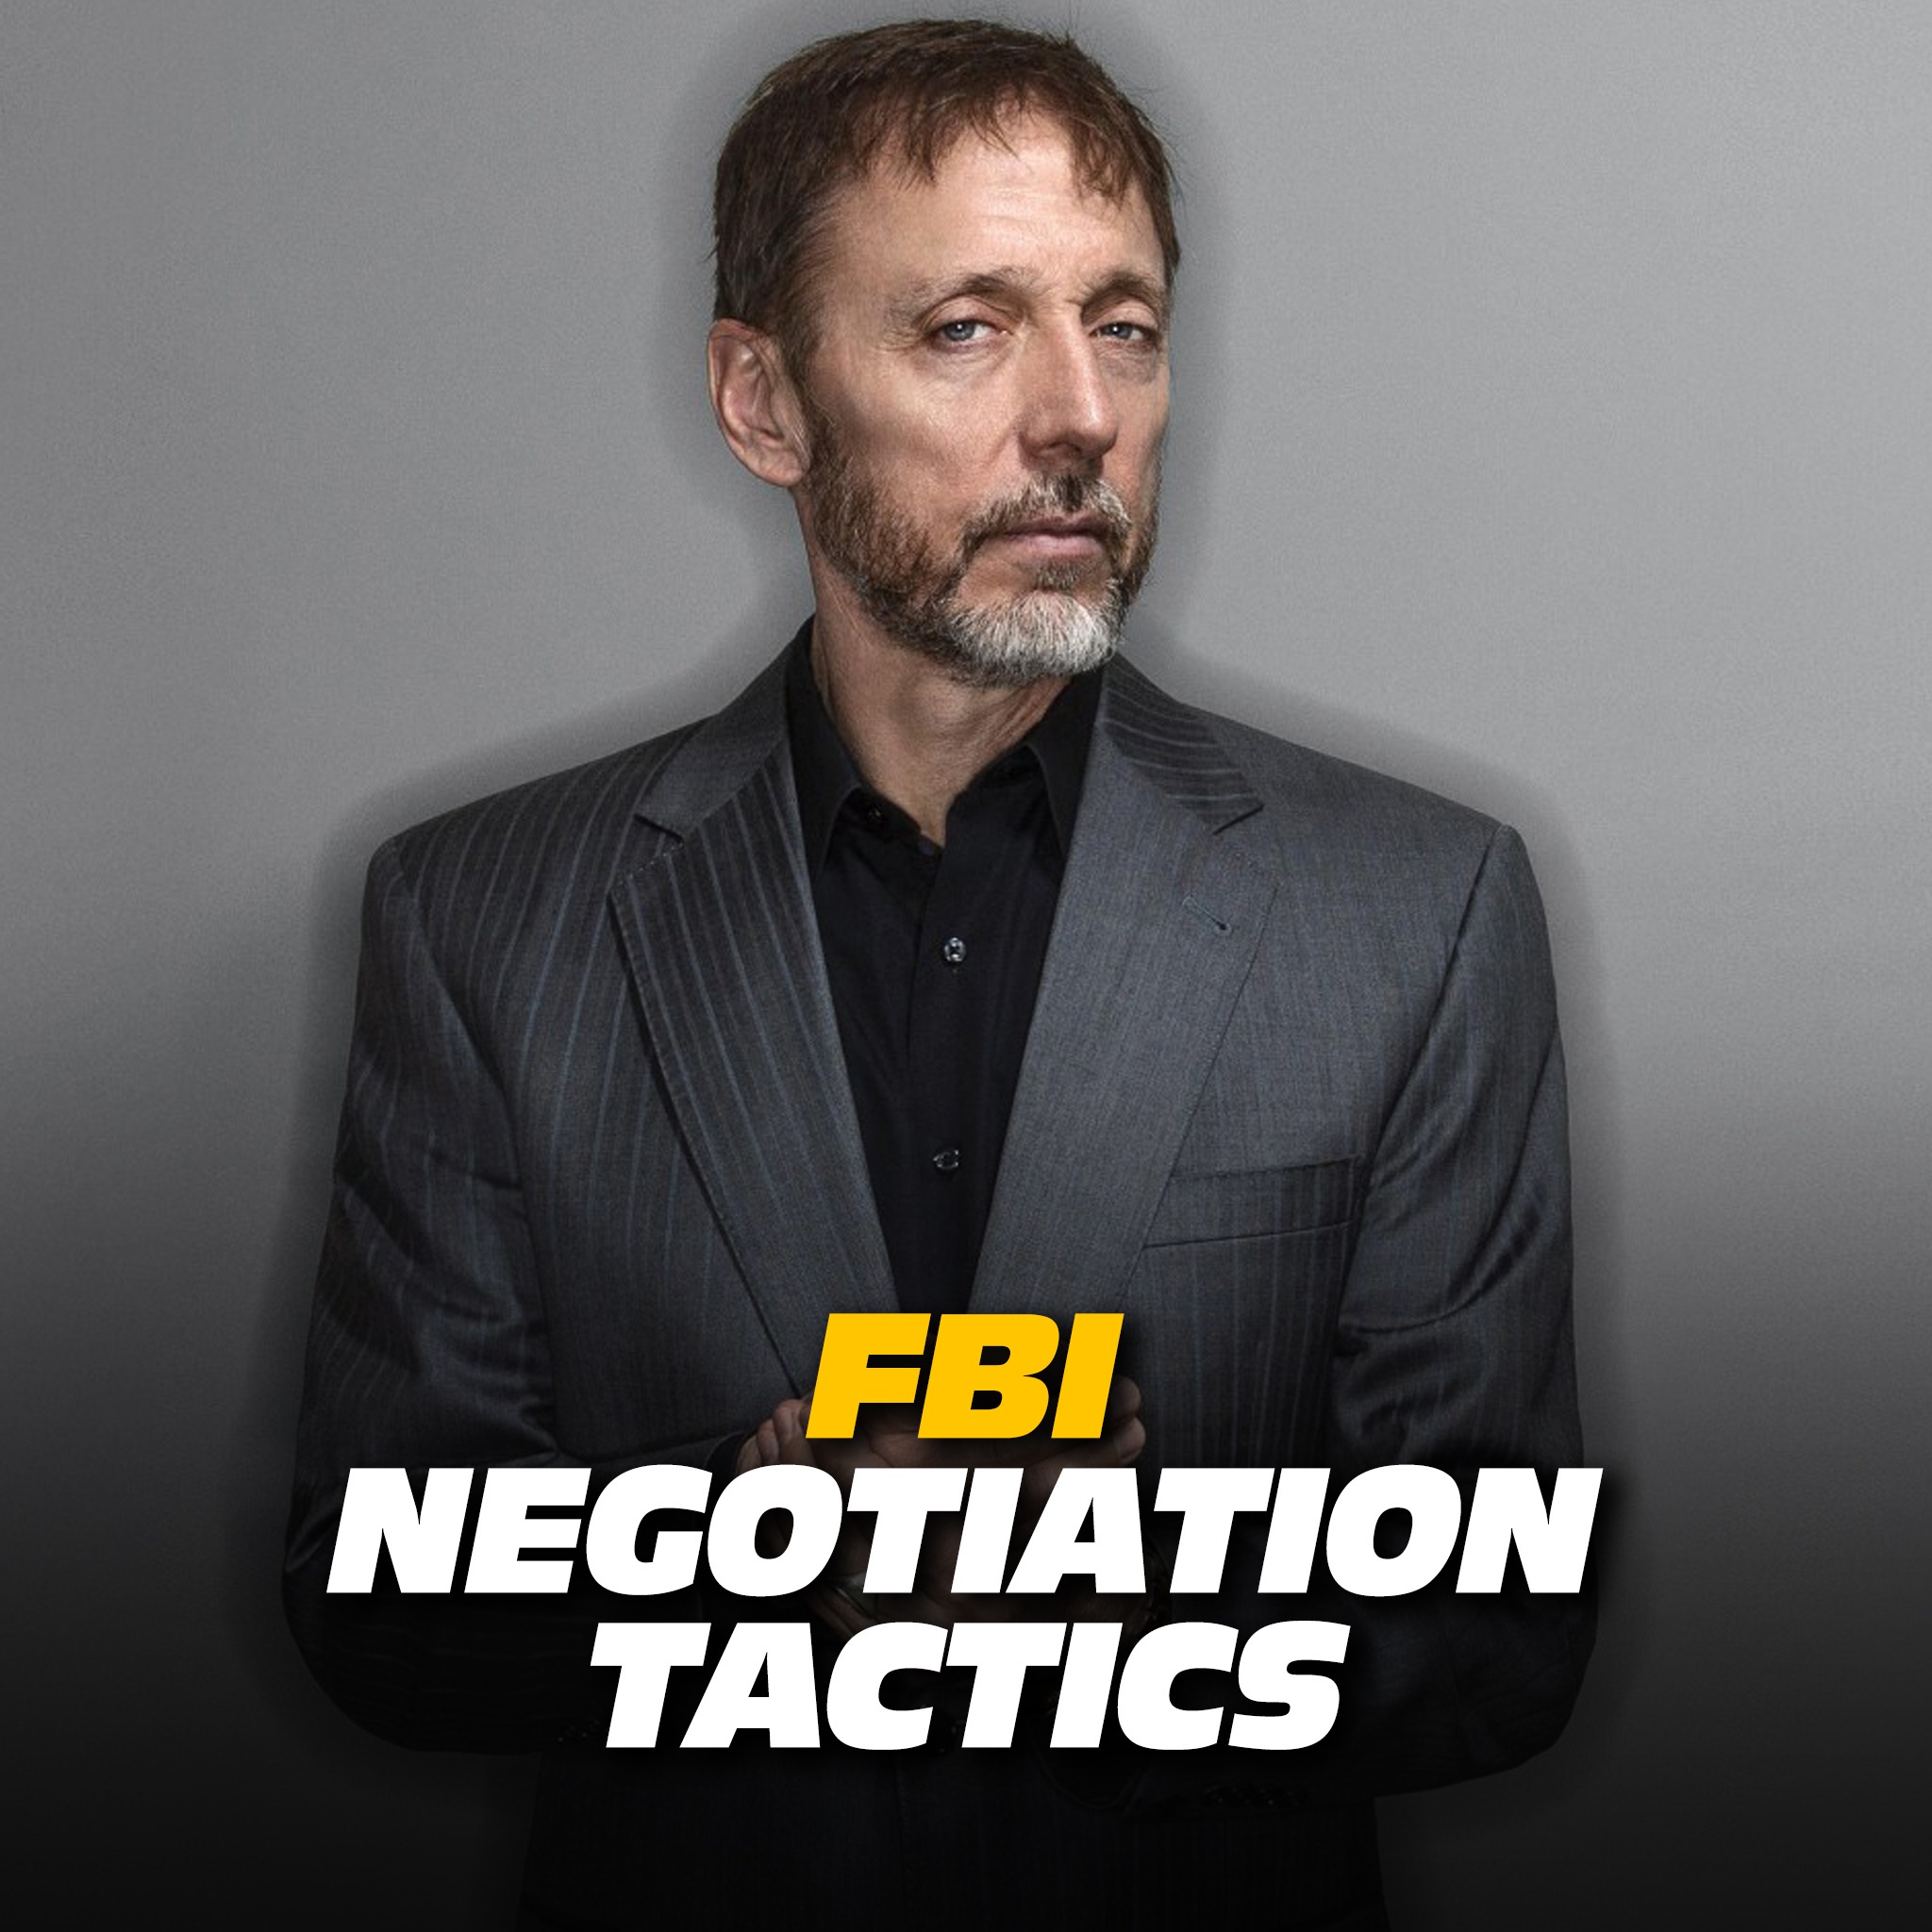 FBI Negotiation Tactics for Business